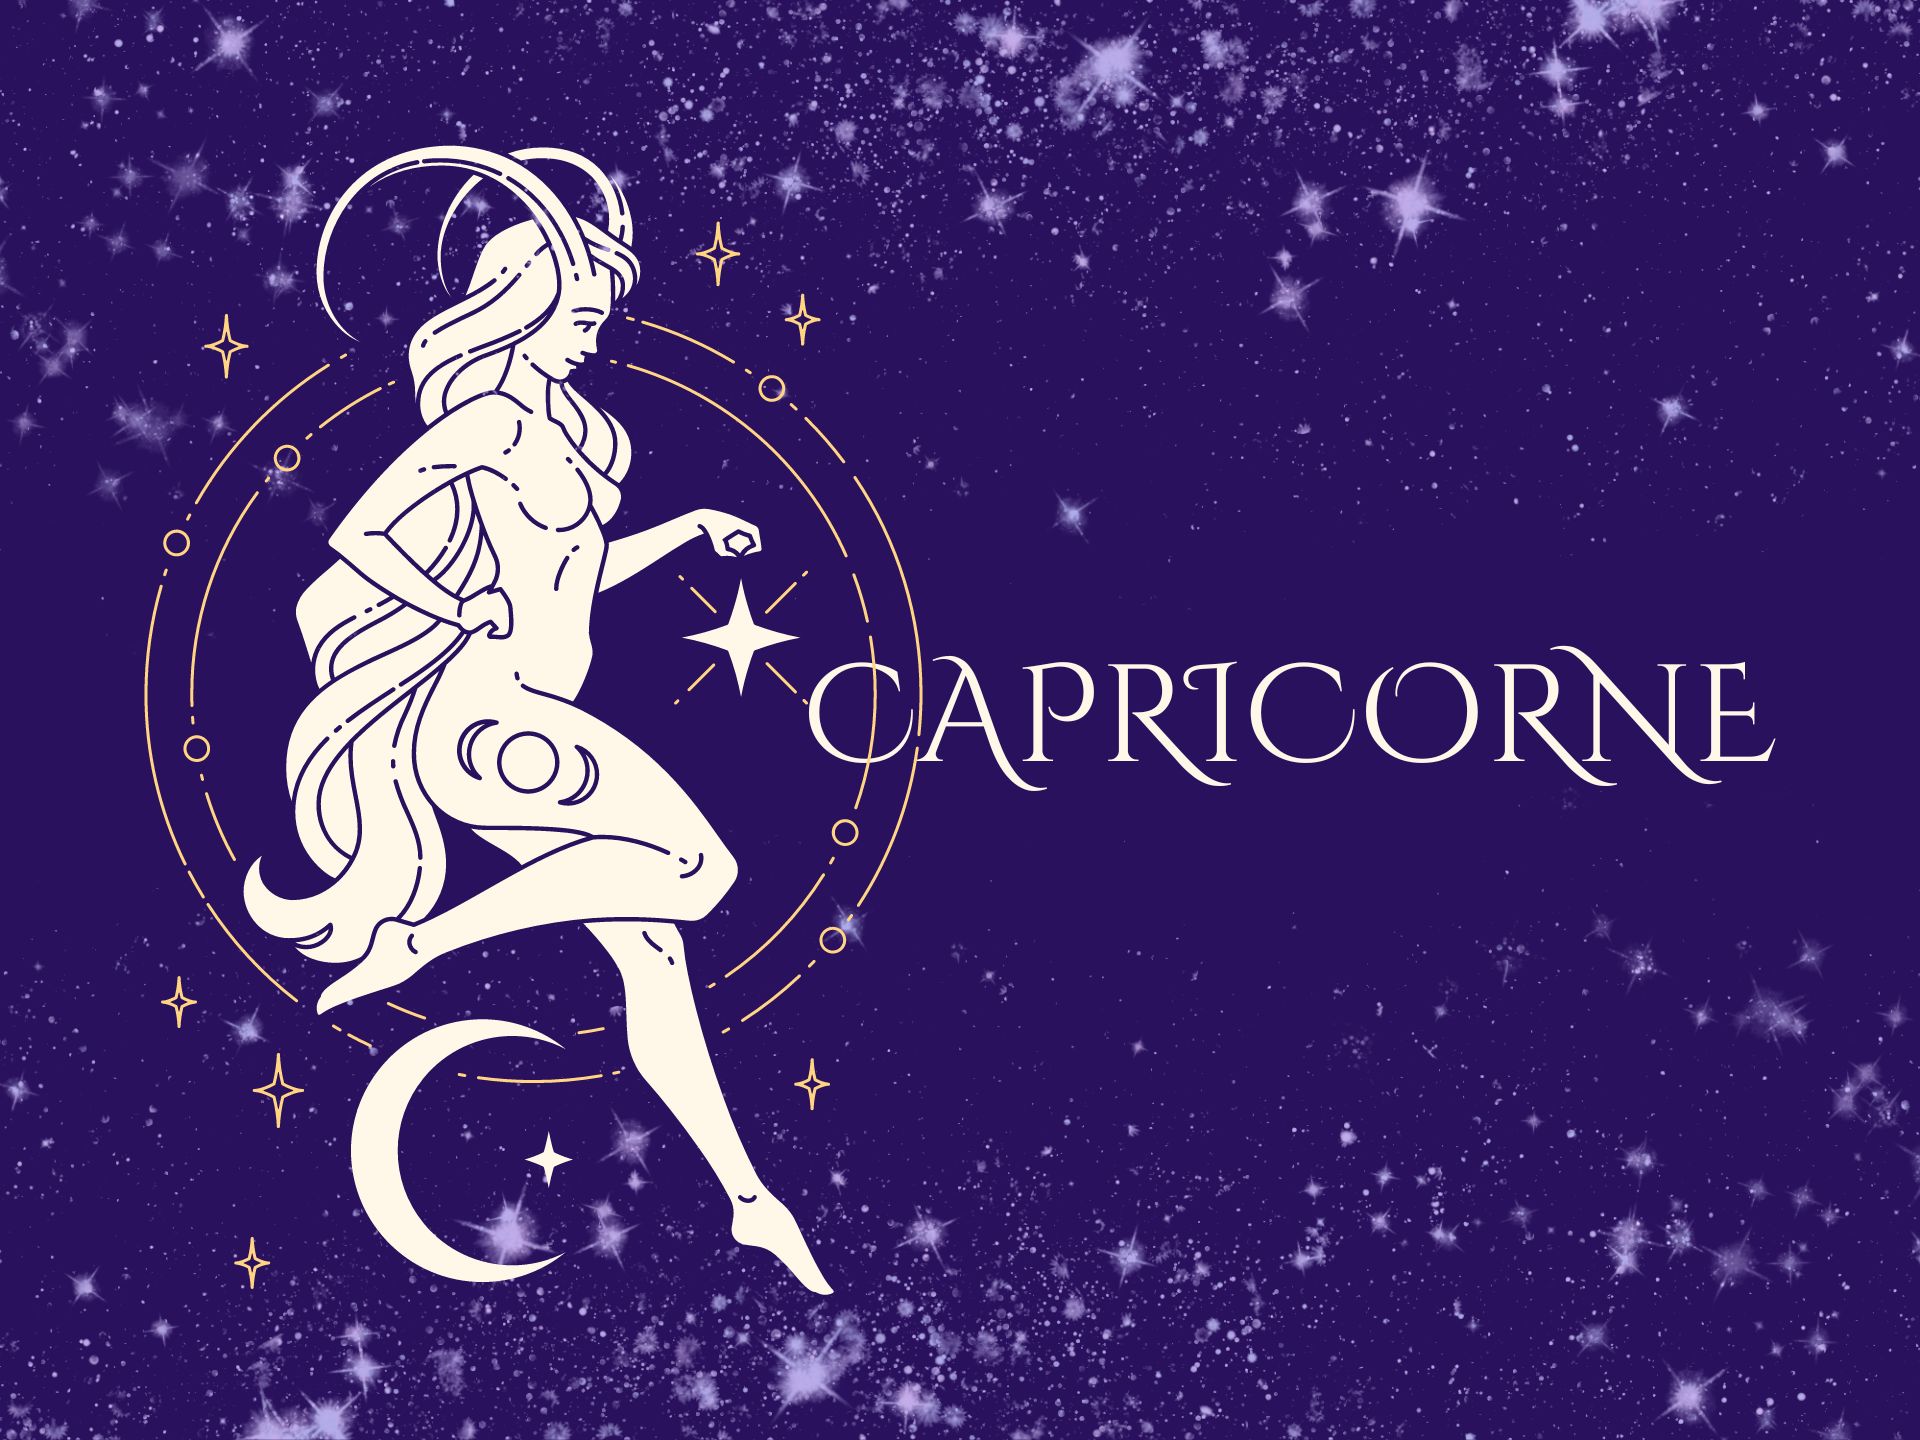 Le Signe du Capricorne en Astrologie